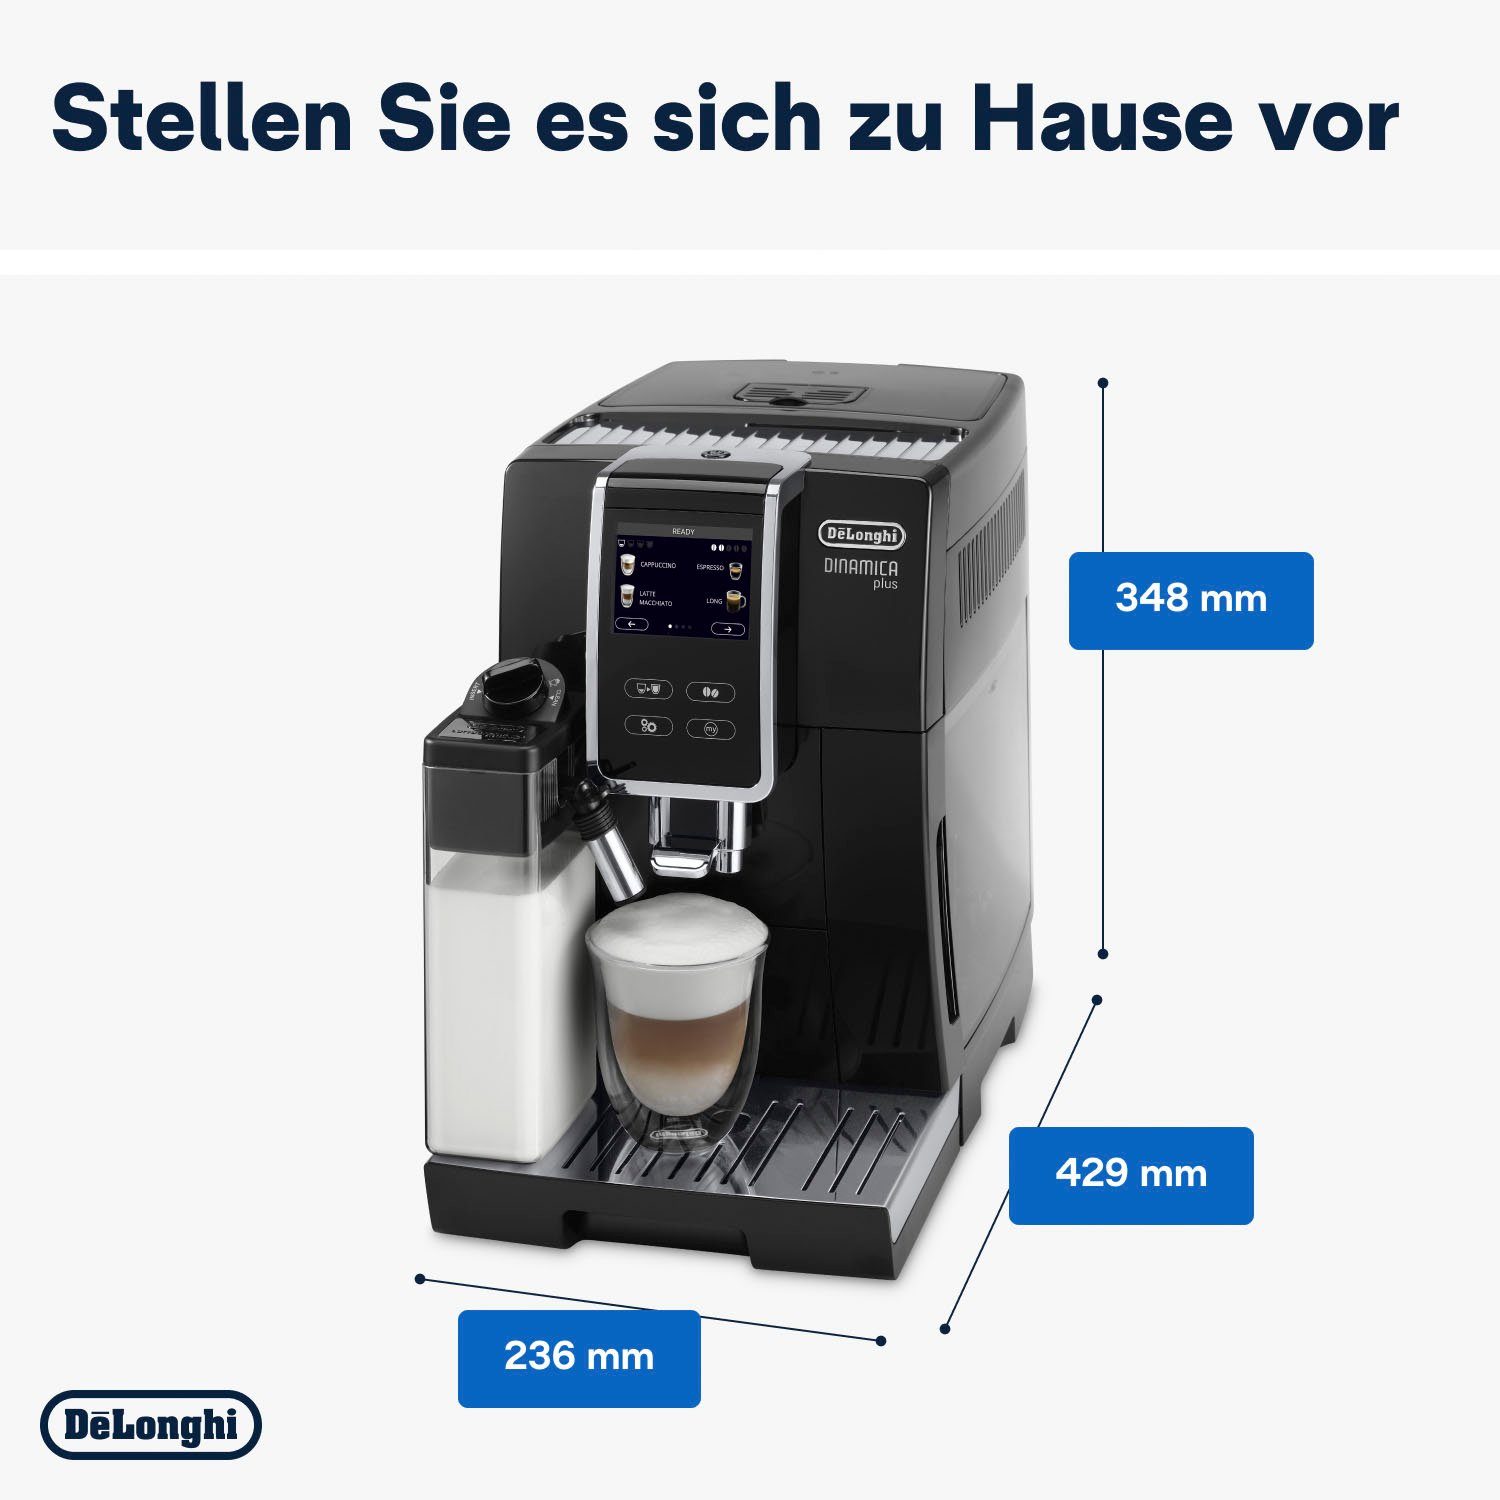 De'Longhi Kaffeevollautomat Dinamica Plus Kaffeekannenfunktion LatteCrema ECAM Milchsystem mit und 370.70.B